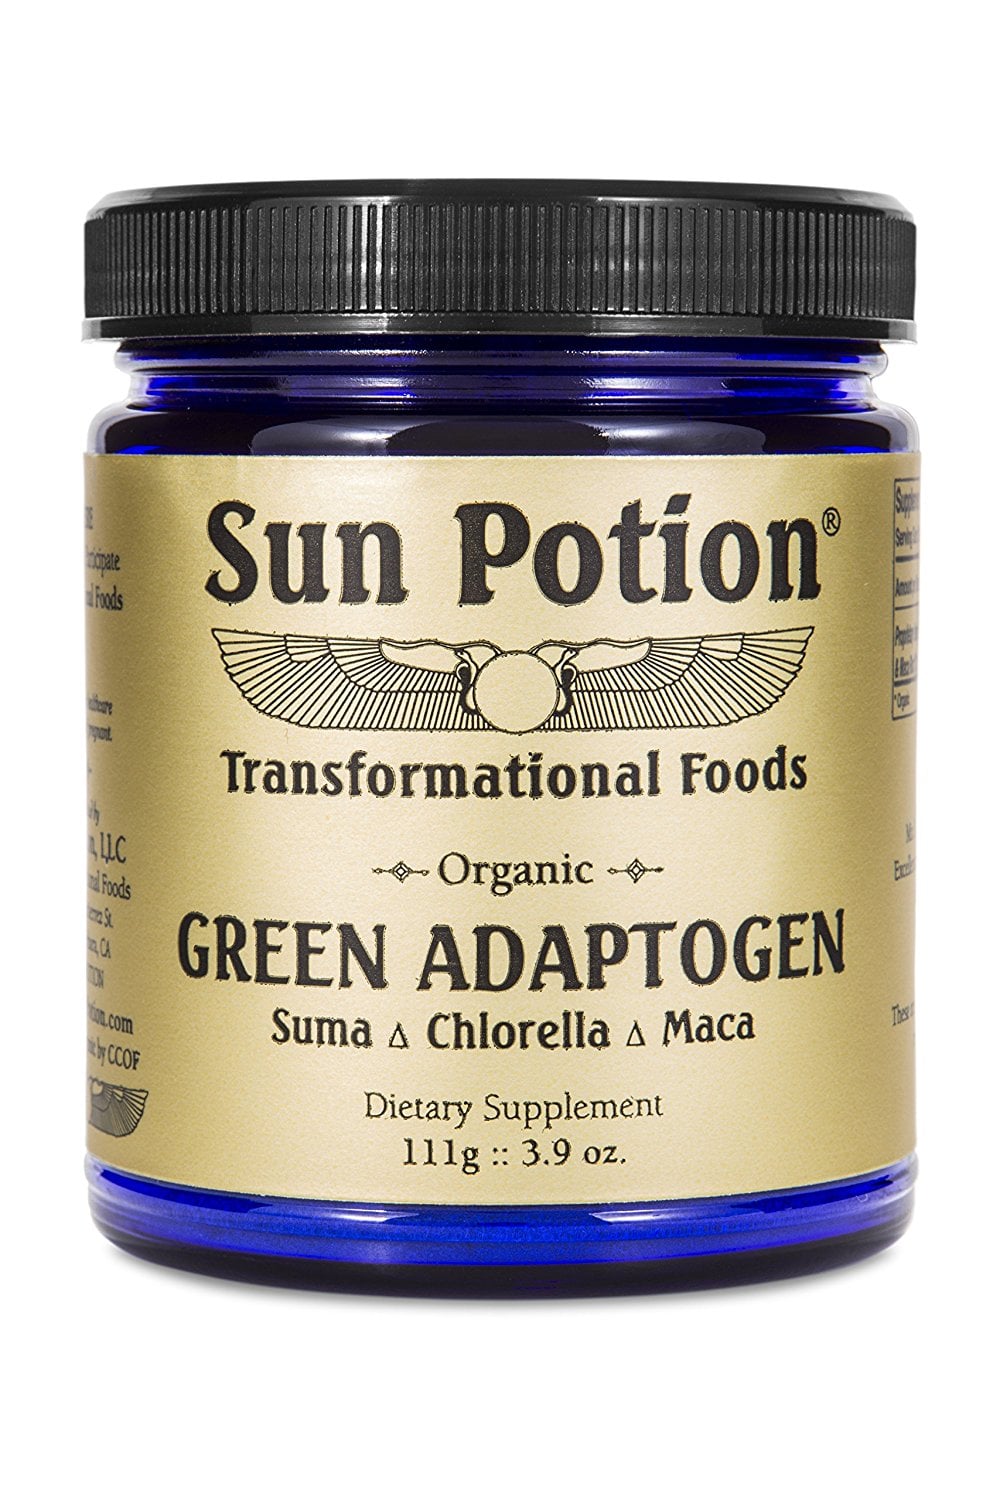 Sun Potion Green Adaptogen Powder Boost Your Brain Health With